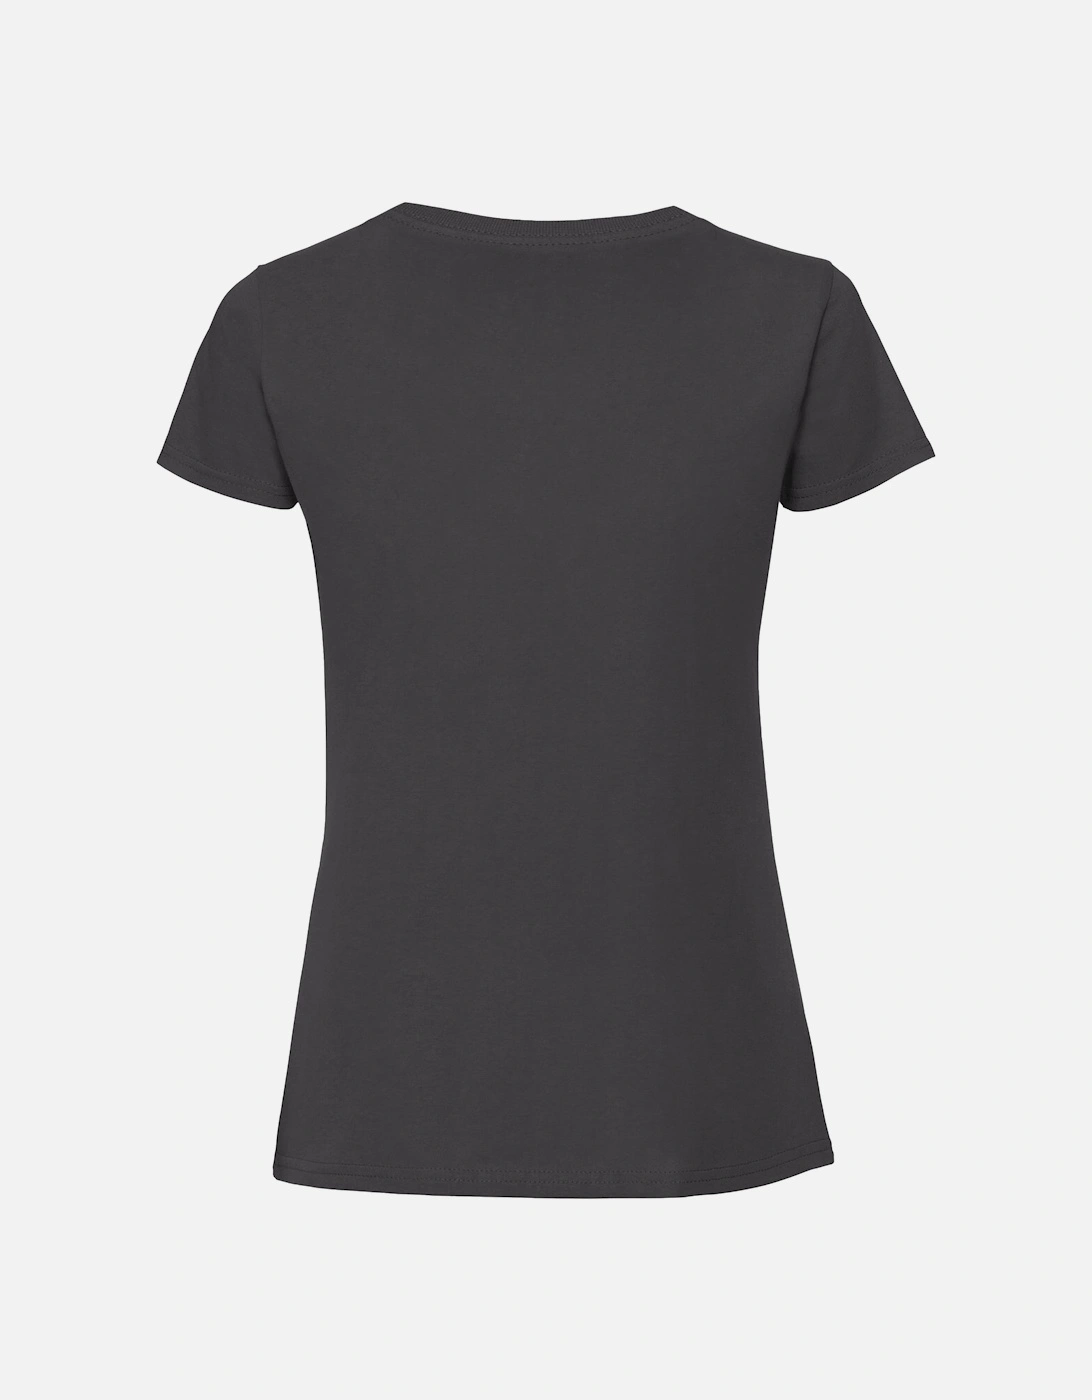 Womens/Ladies Fit Ringspun Premium Tshirt